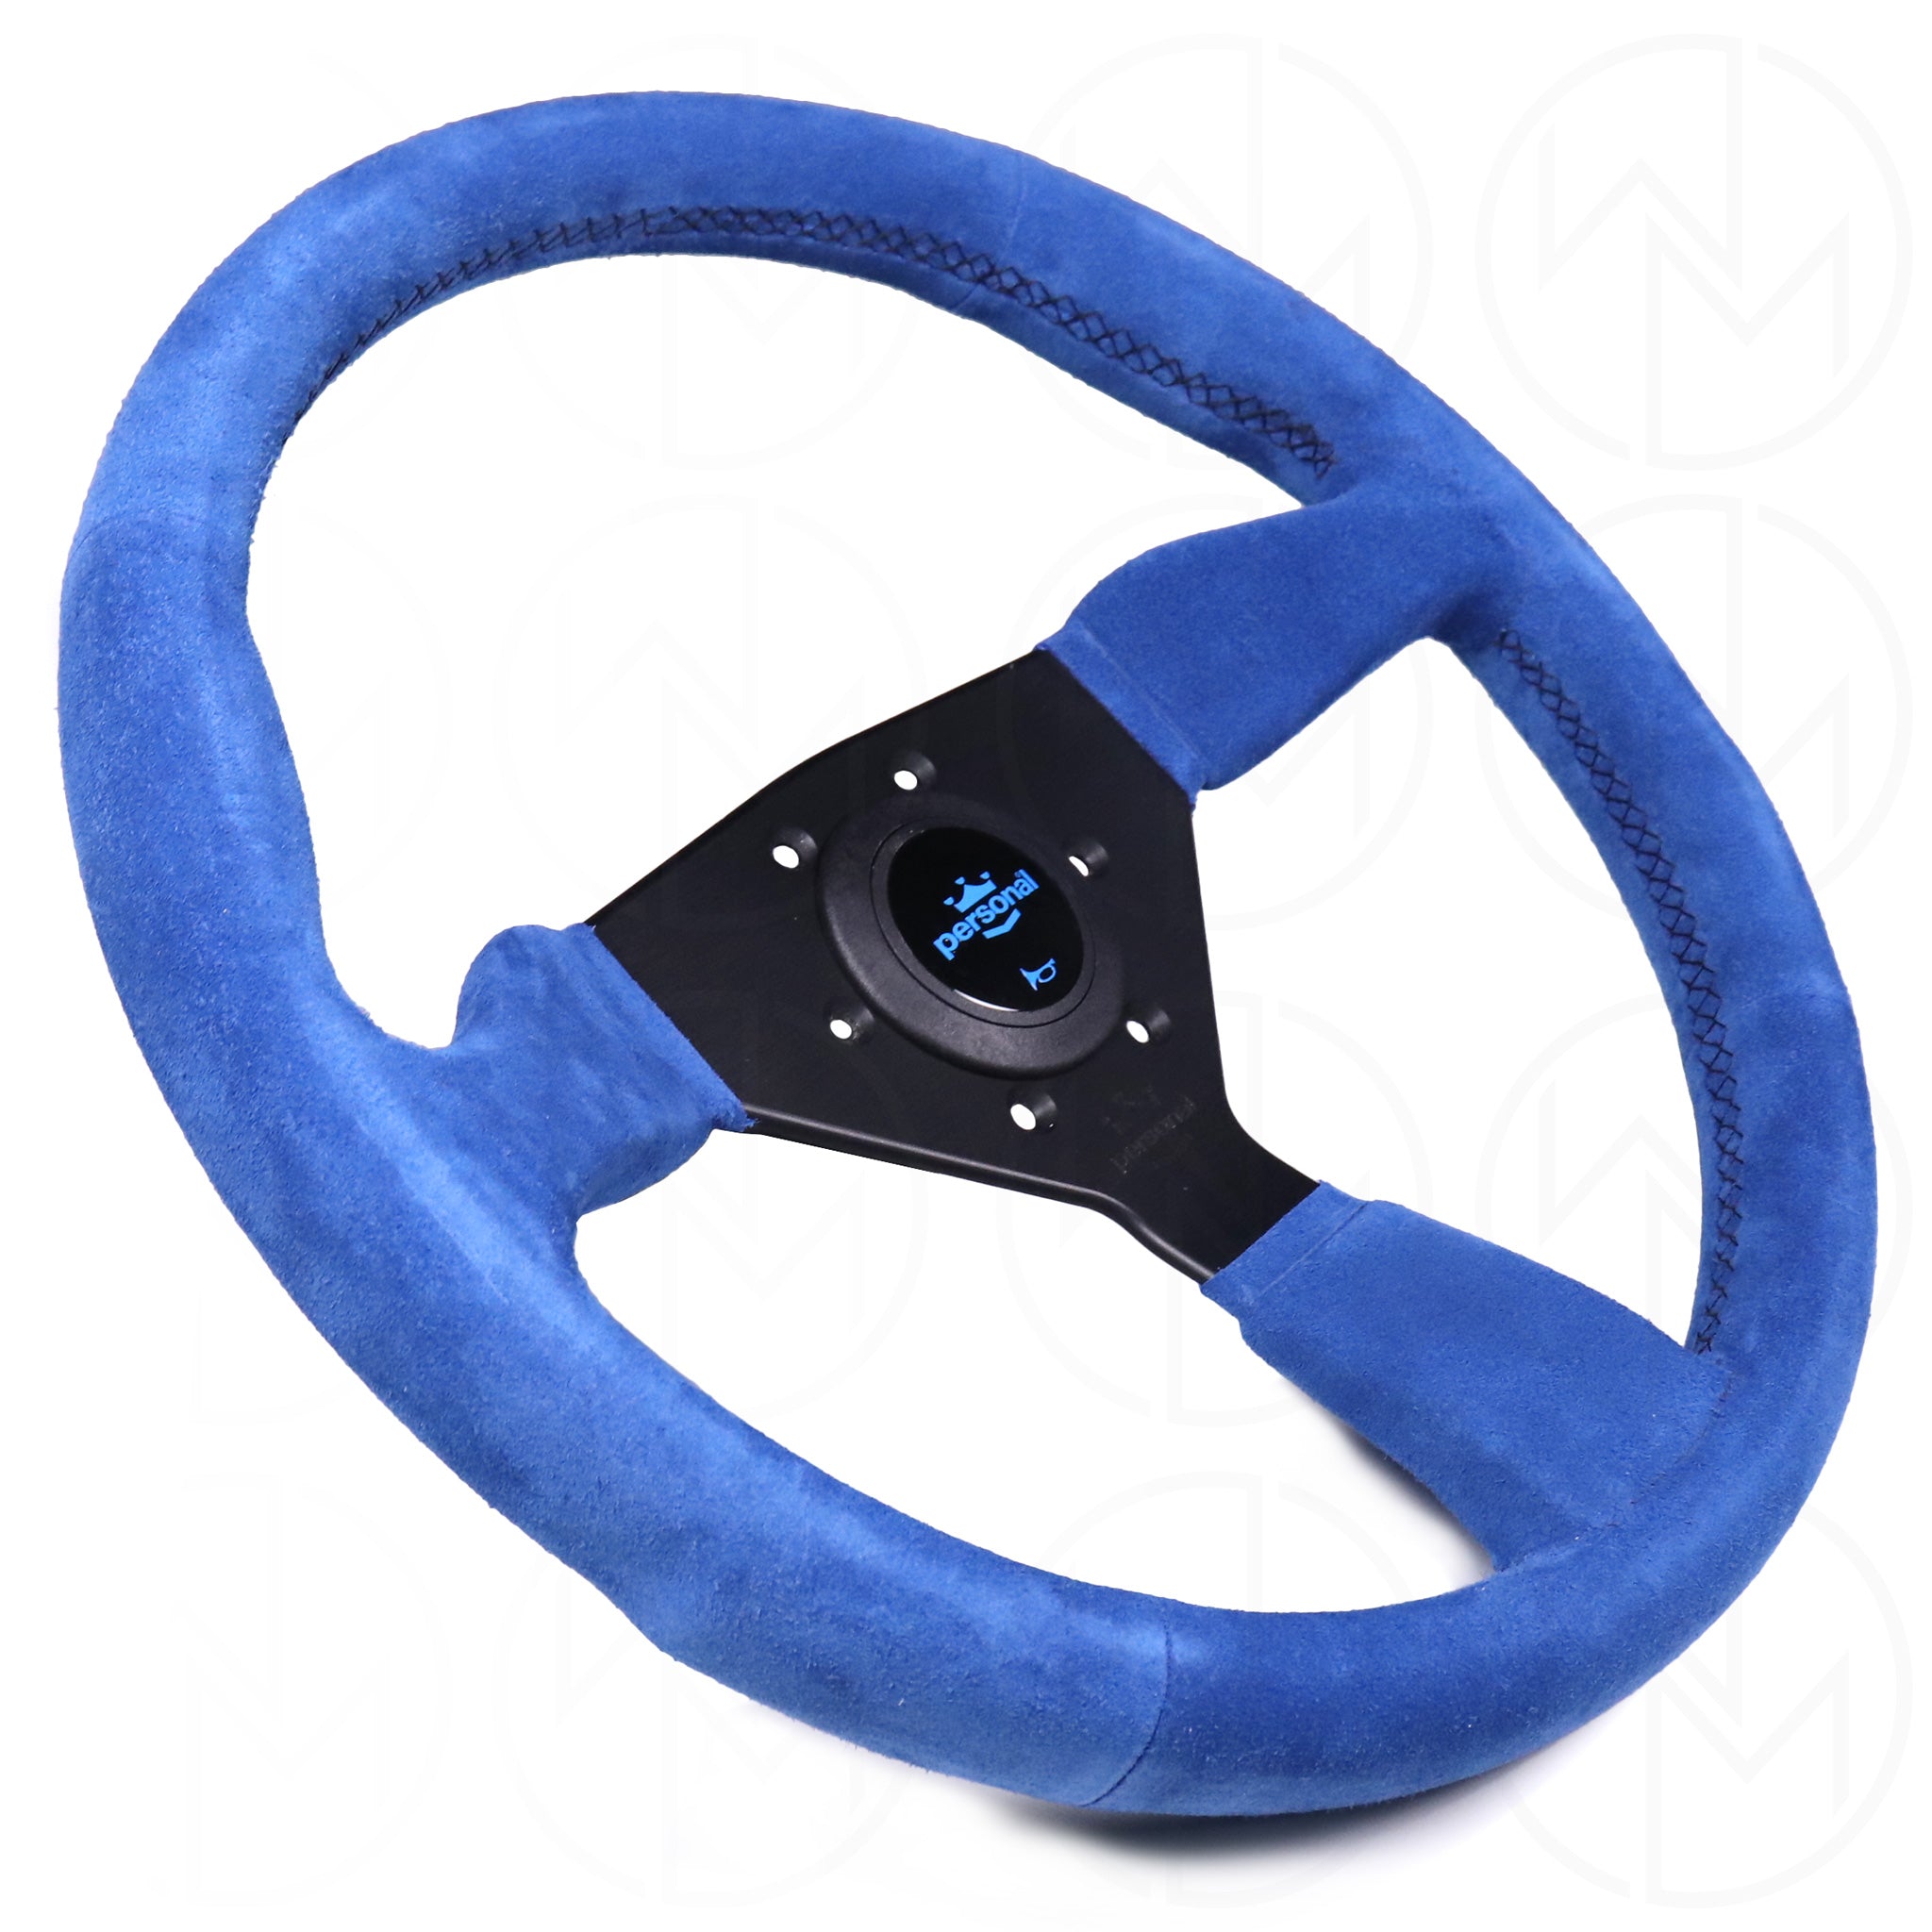 Personal Grinta Steering Wheel - 350mm Blue Suede w/Black Stitch